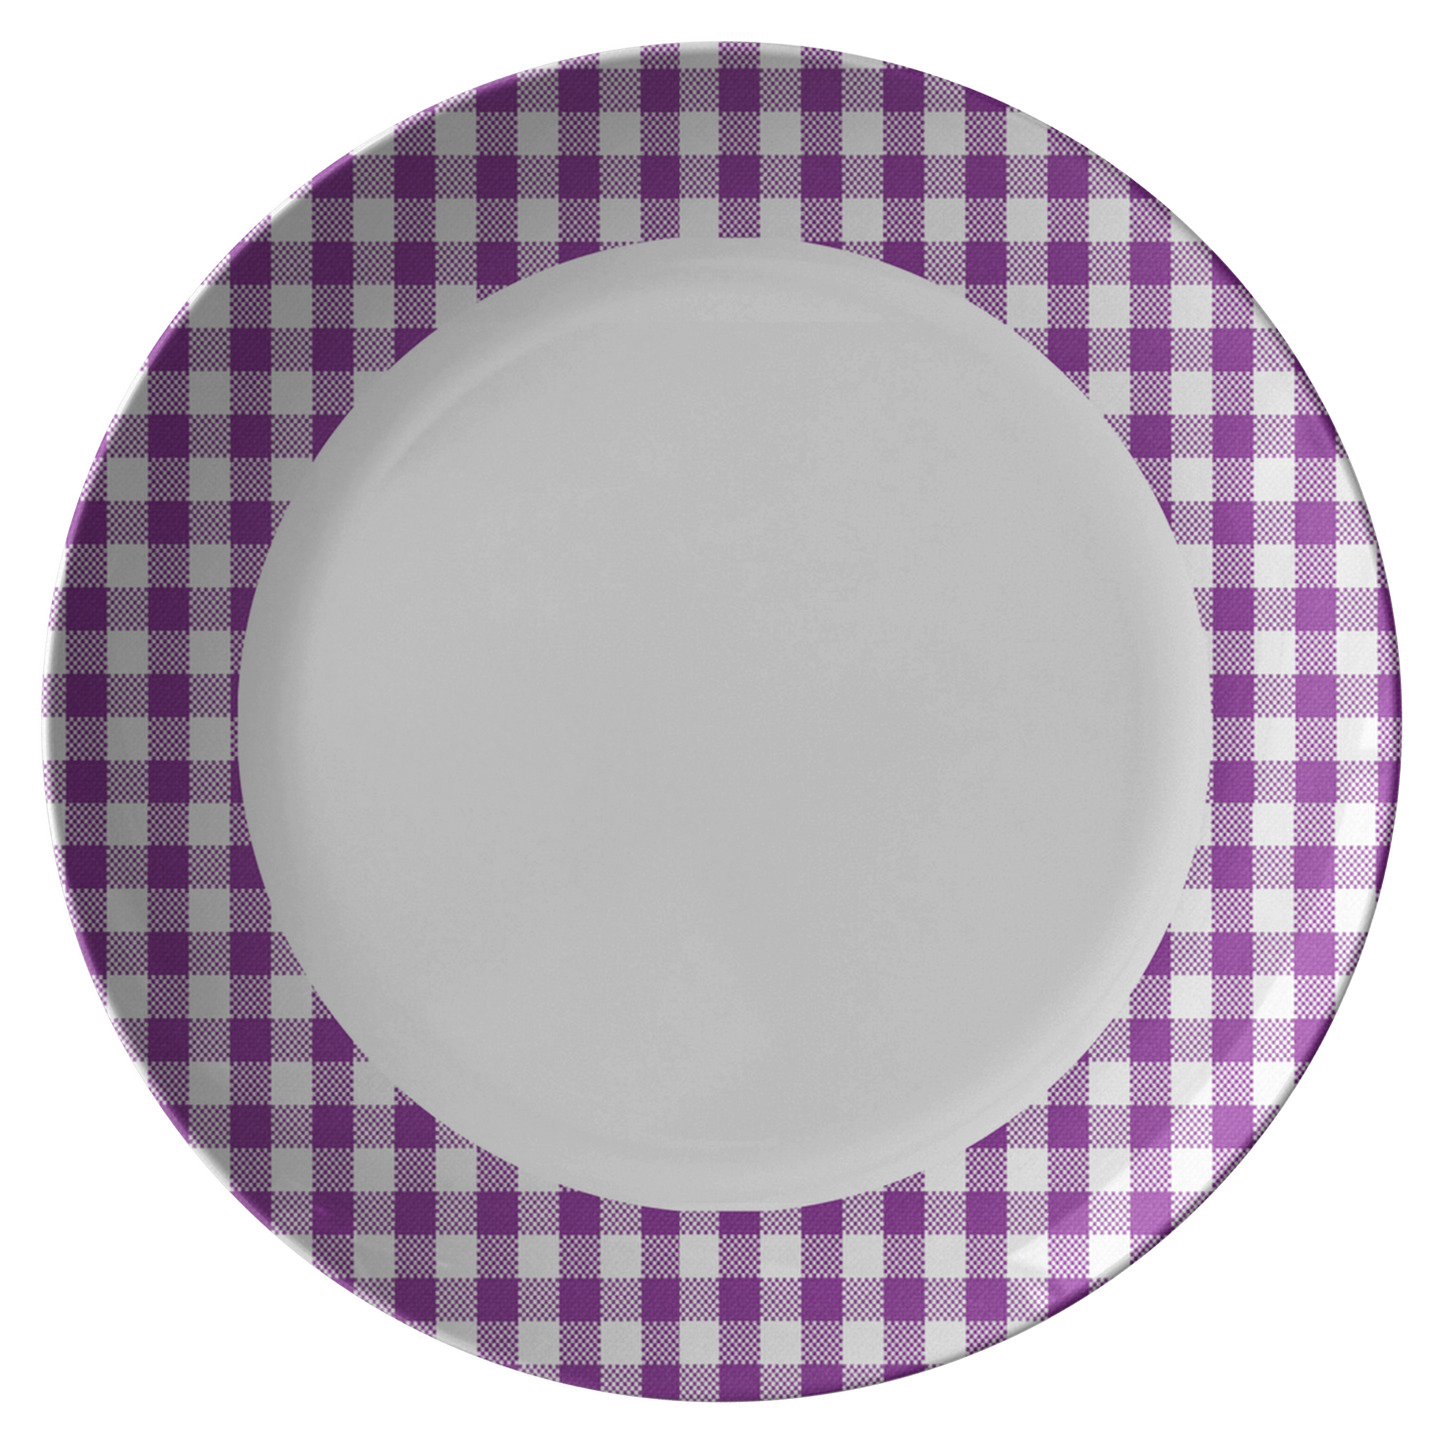 Sartorially Checked Grape Plate